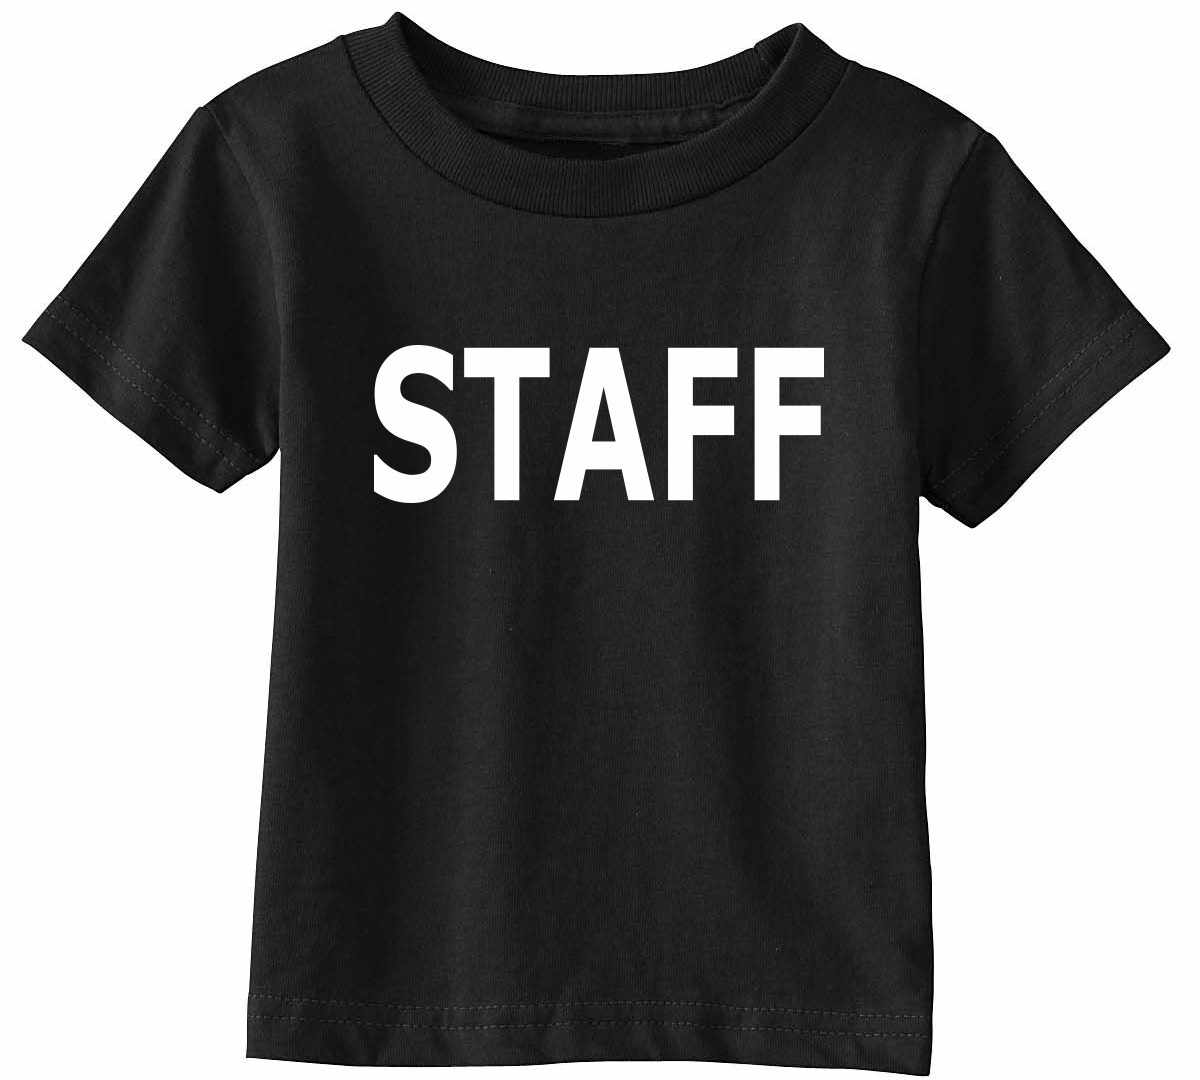 STAFF on Infant-Toddler T-Shirt (#923-7)